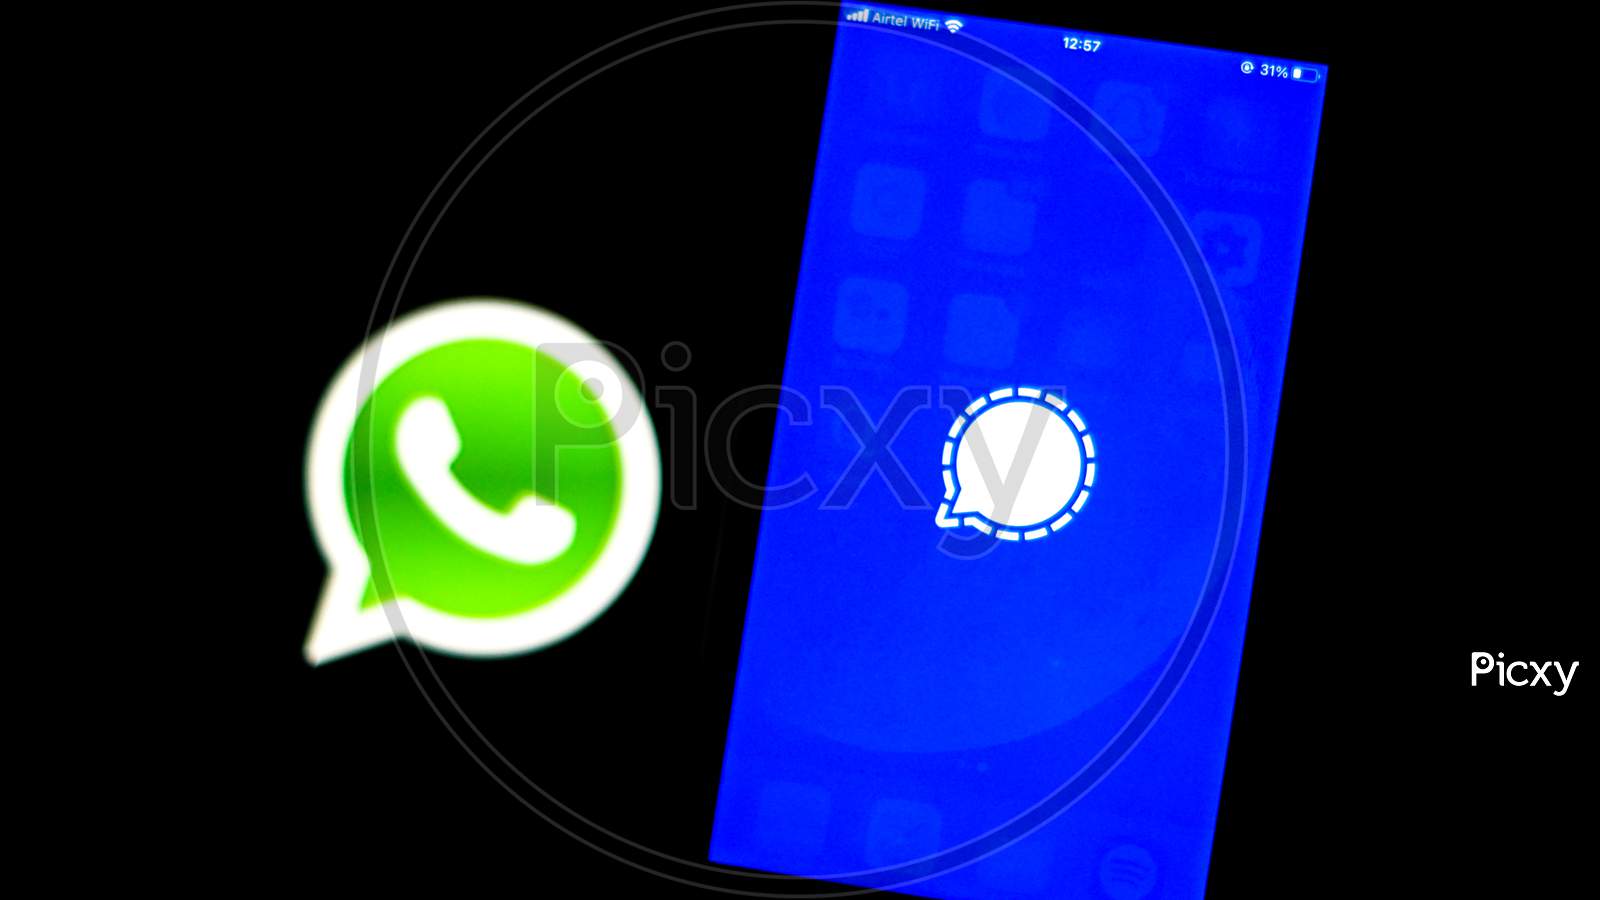 Signal Mobile Messaging App Logo an Alternative to Whatsapp on Smartphone Screen